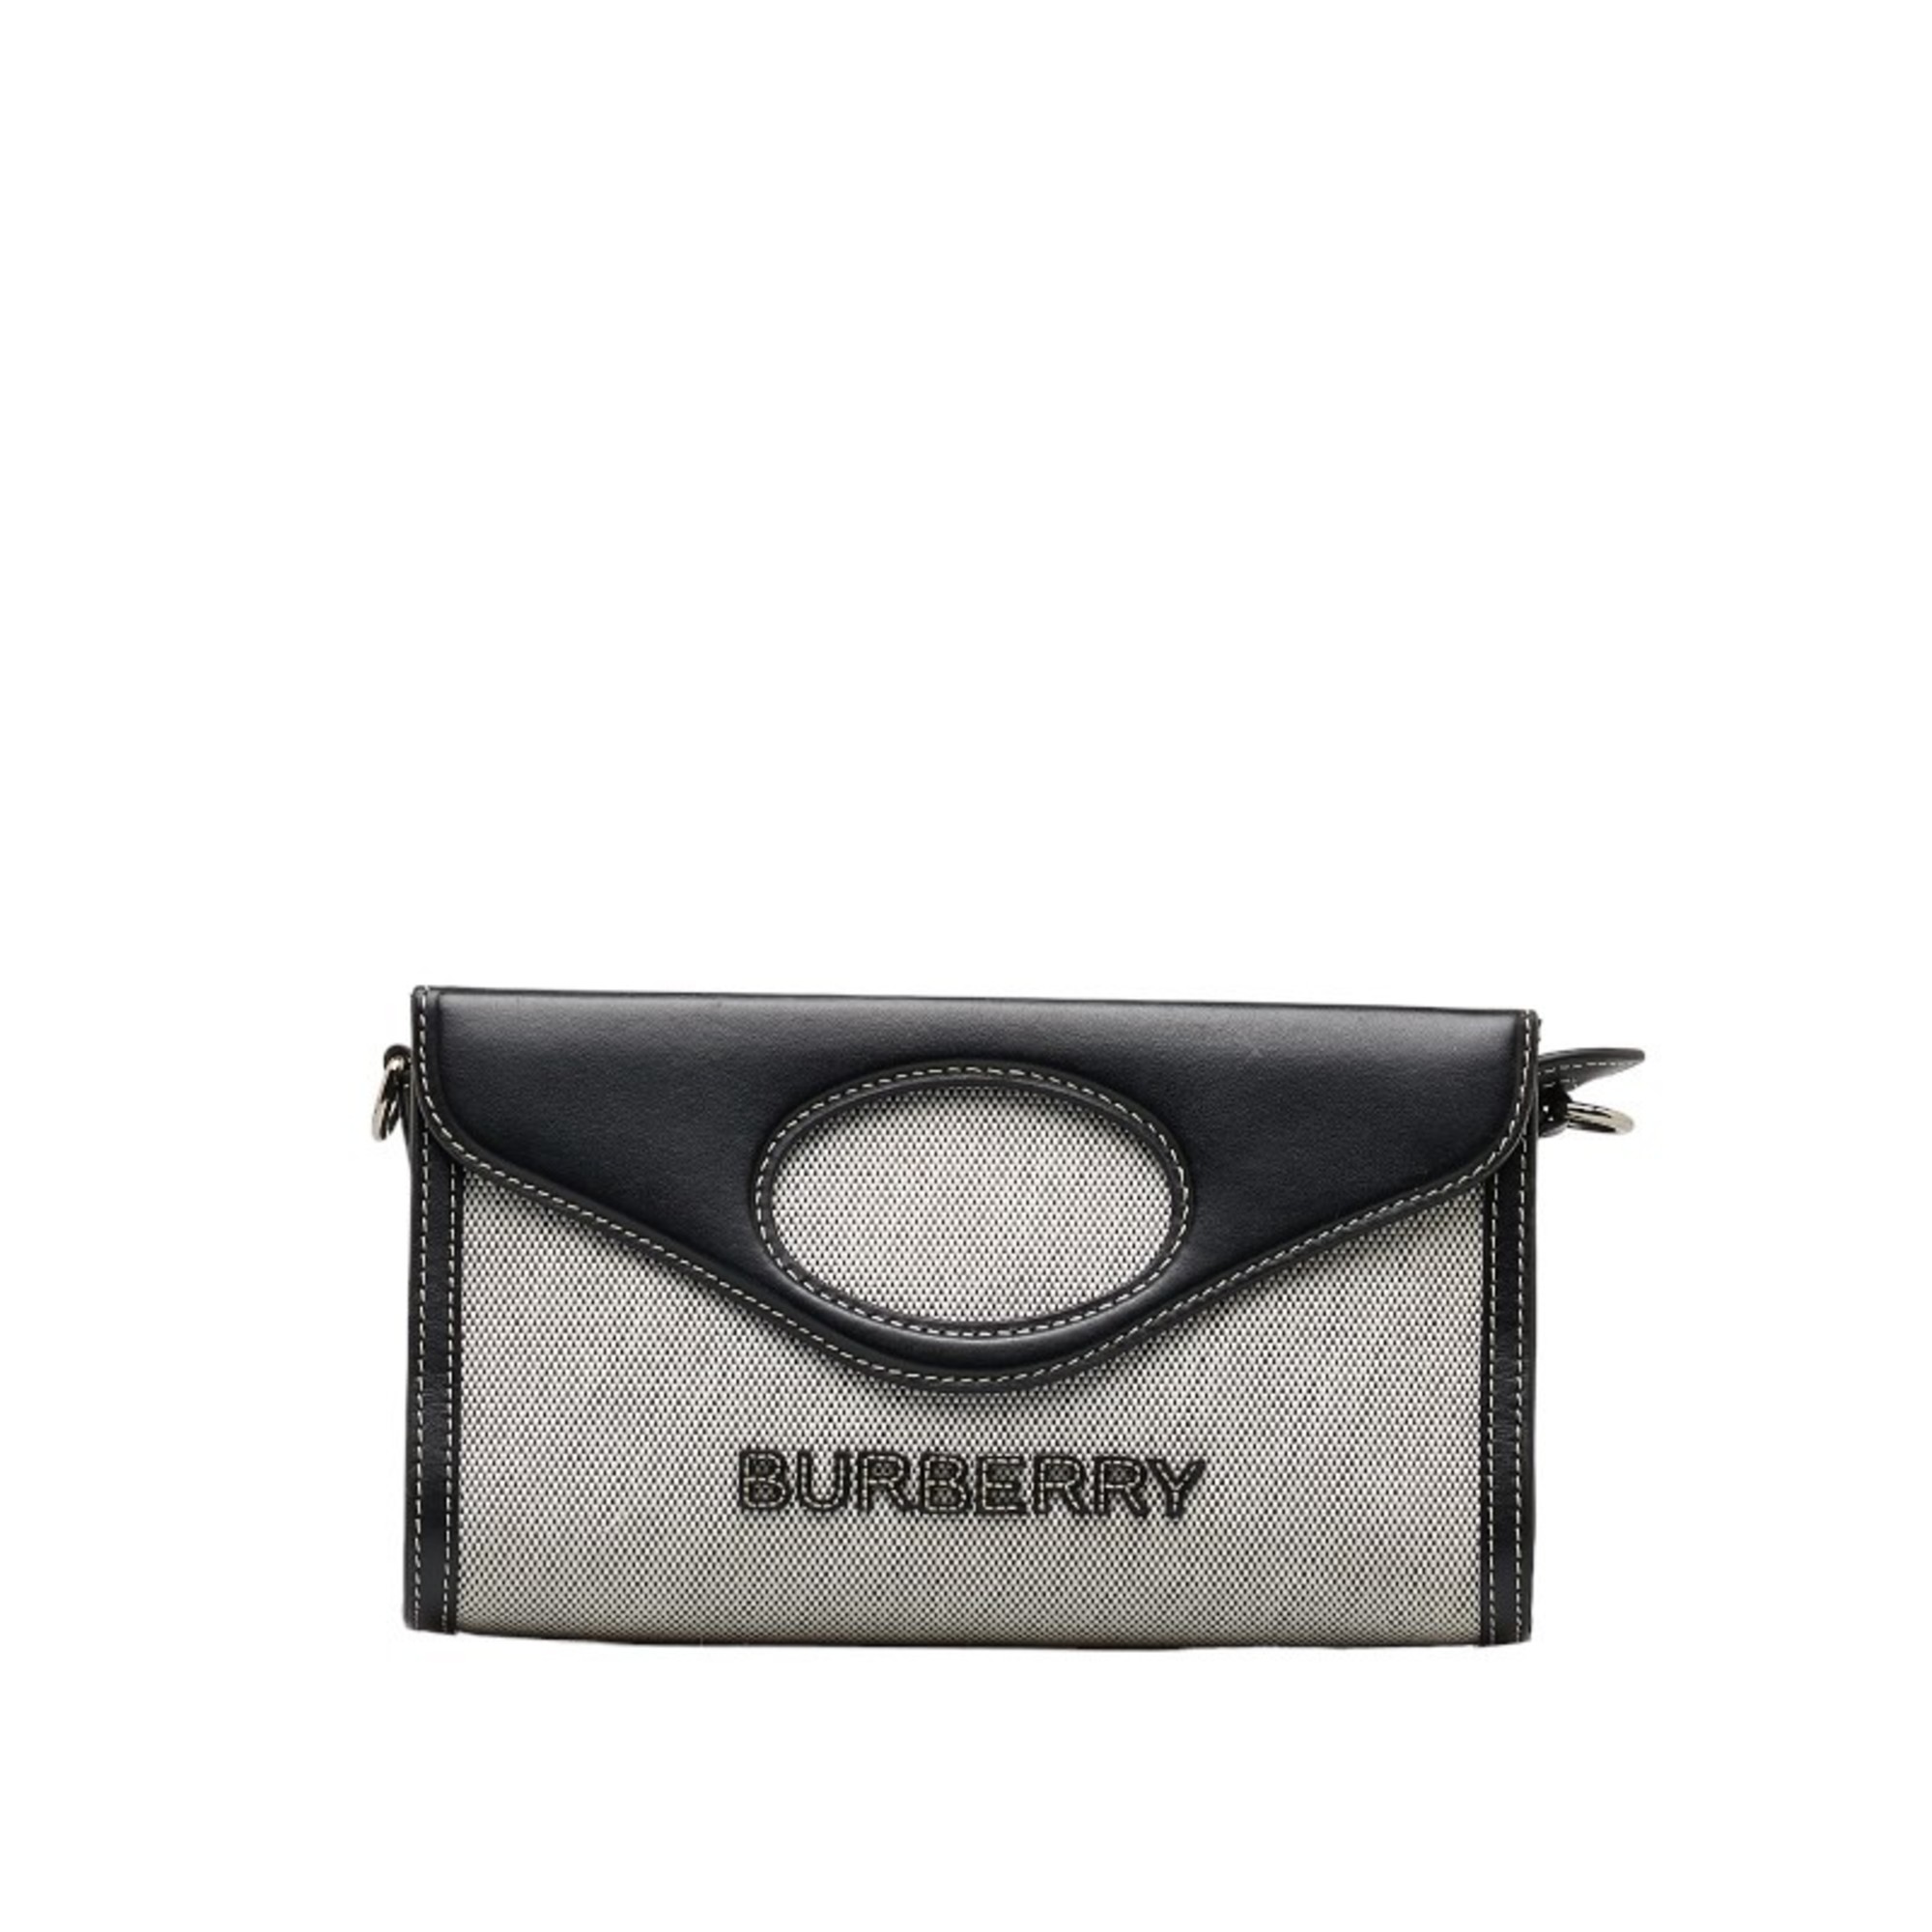 Burberry Horseferry Handbag Shoulder Bag Grey Black Cotton Canvas Leather Women's BURBERRY